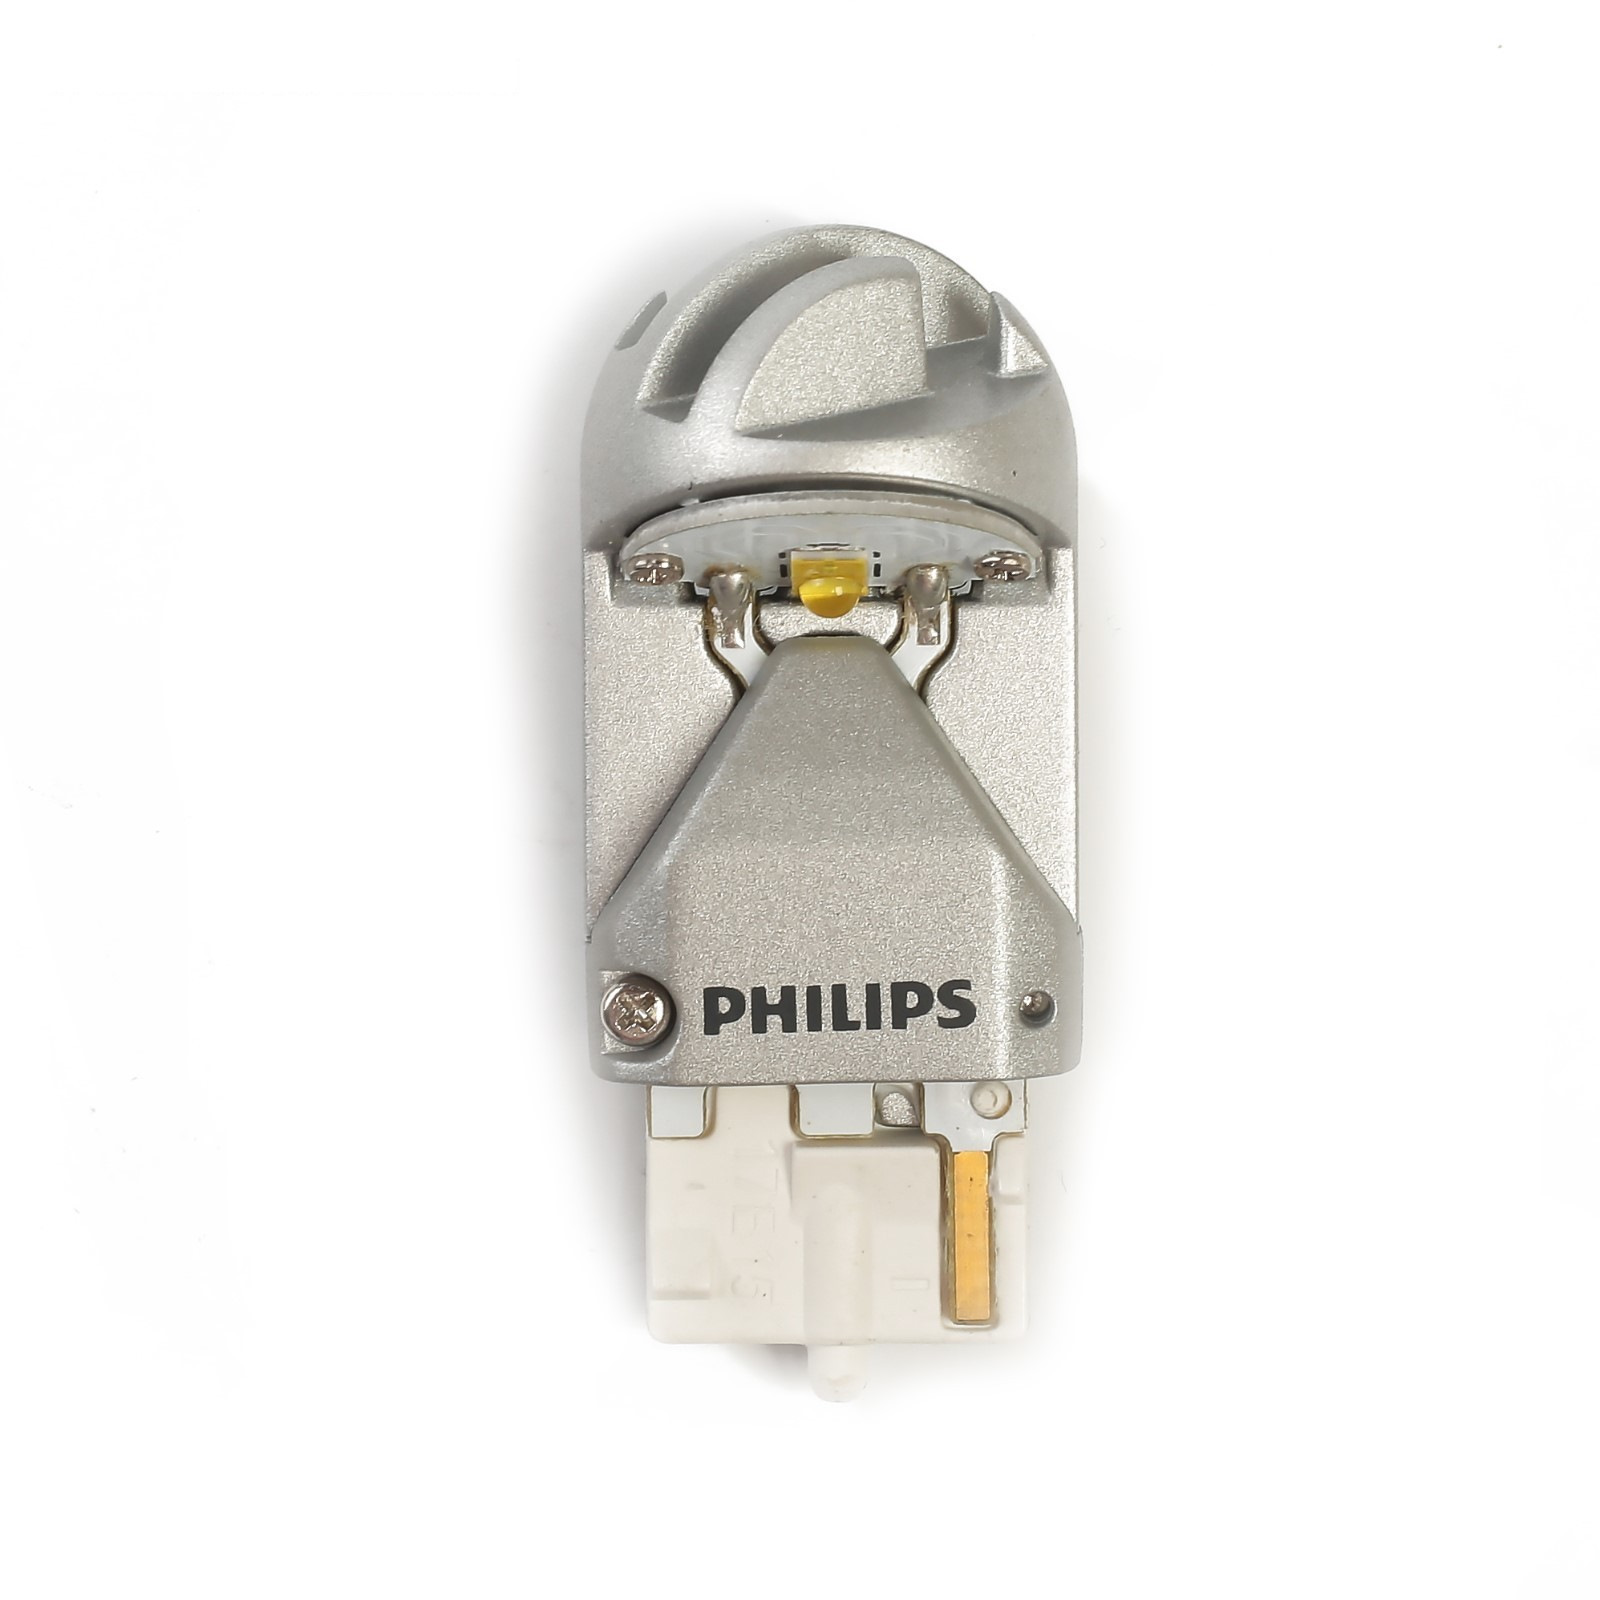 W21w 12v. W21w led Philips. Philips w21w 12795x1. W16w лампа светодиодная Philips. W21/5v лампа светодиодная Philips.